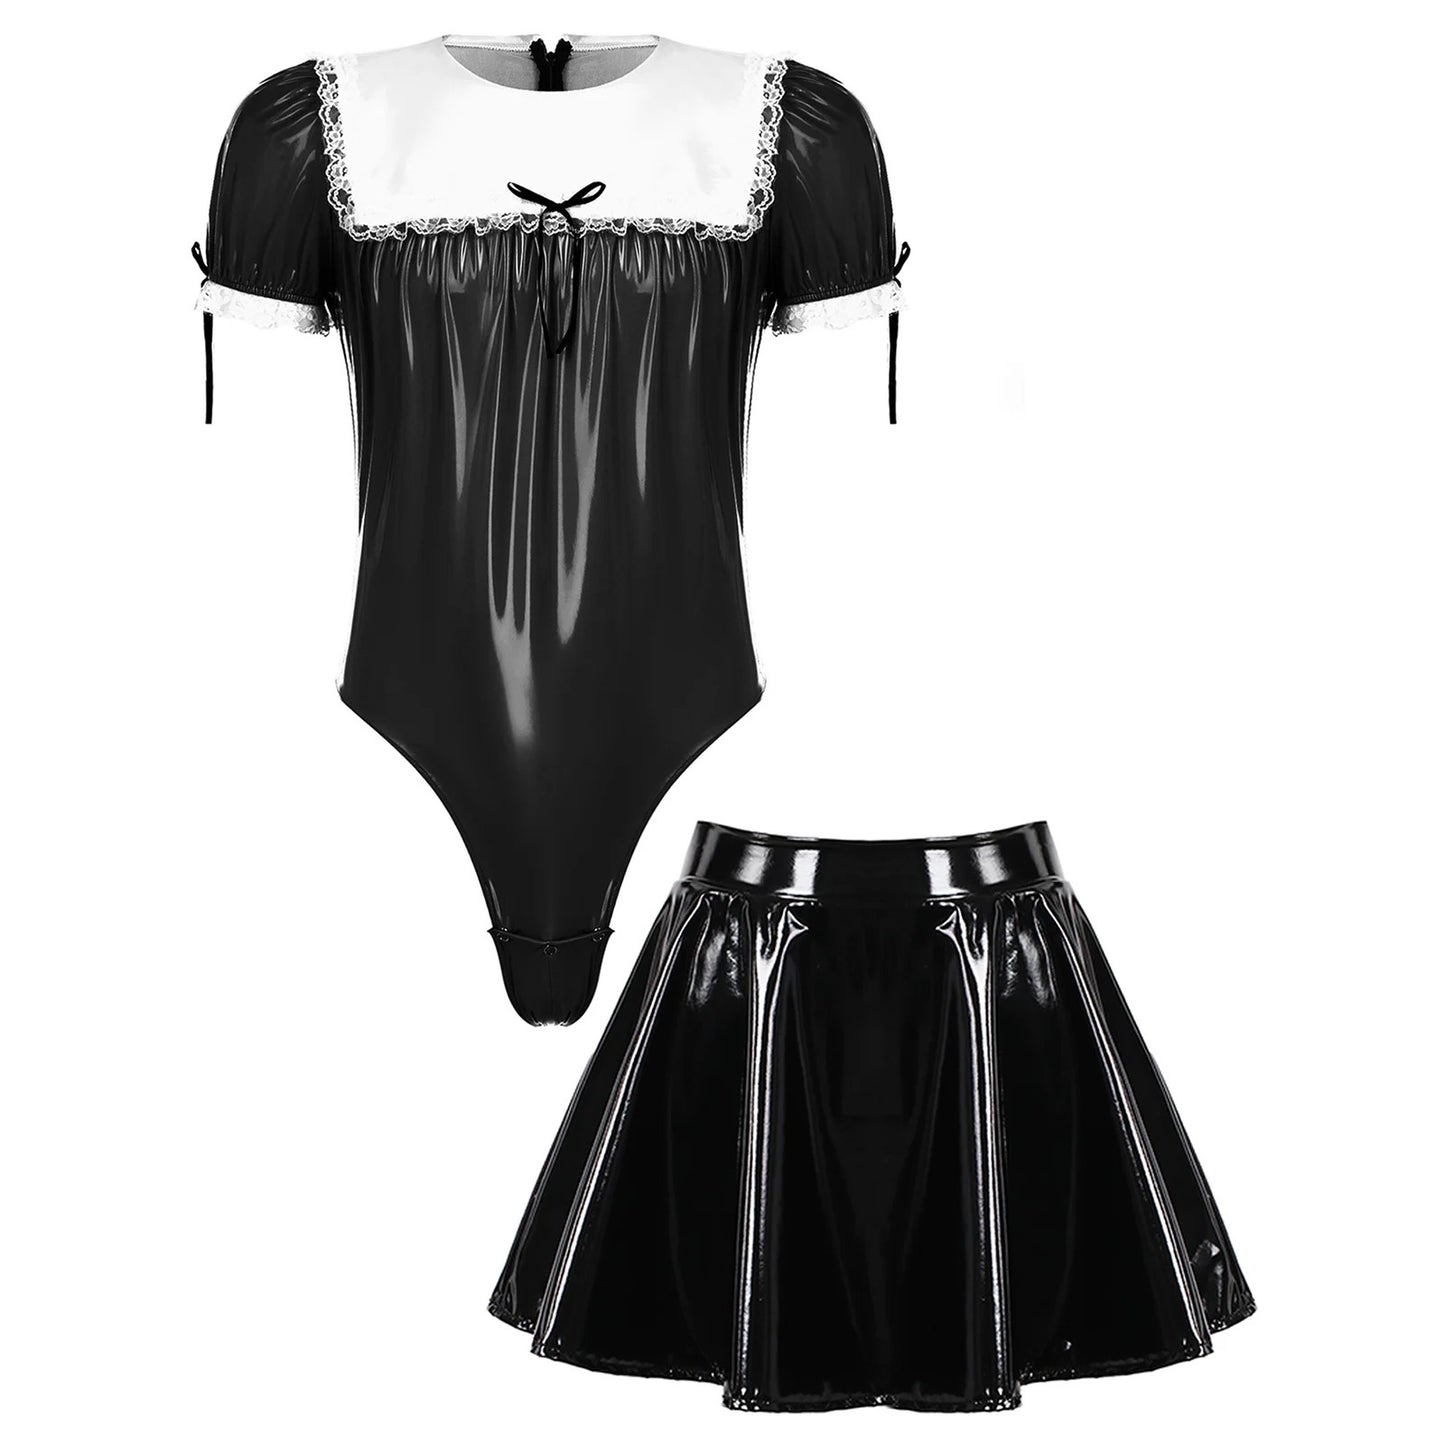 🌸 Step into Glamour: Cute Faux Leather Bodysuit & Skirt Set - Sissylux's Flirty Ensemble for Divine Femininity! 💕